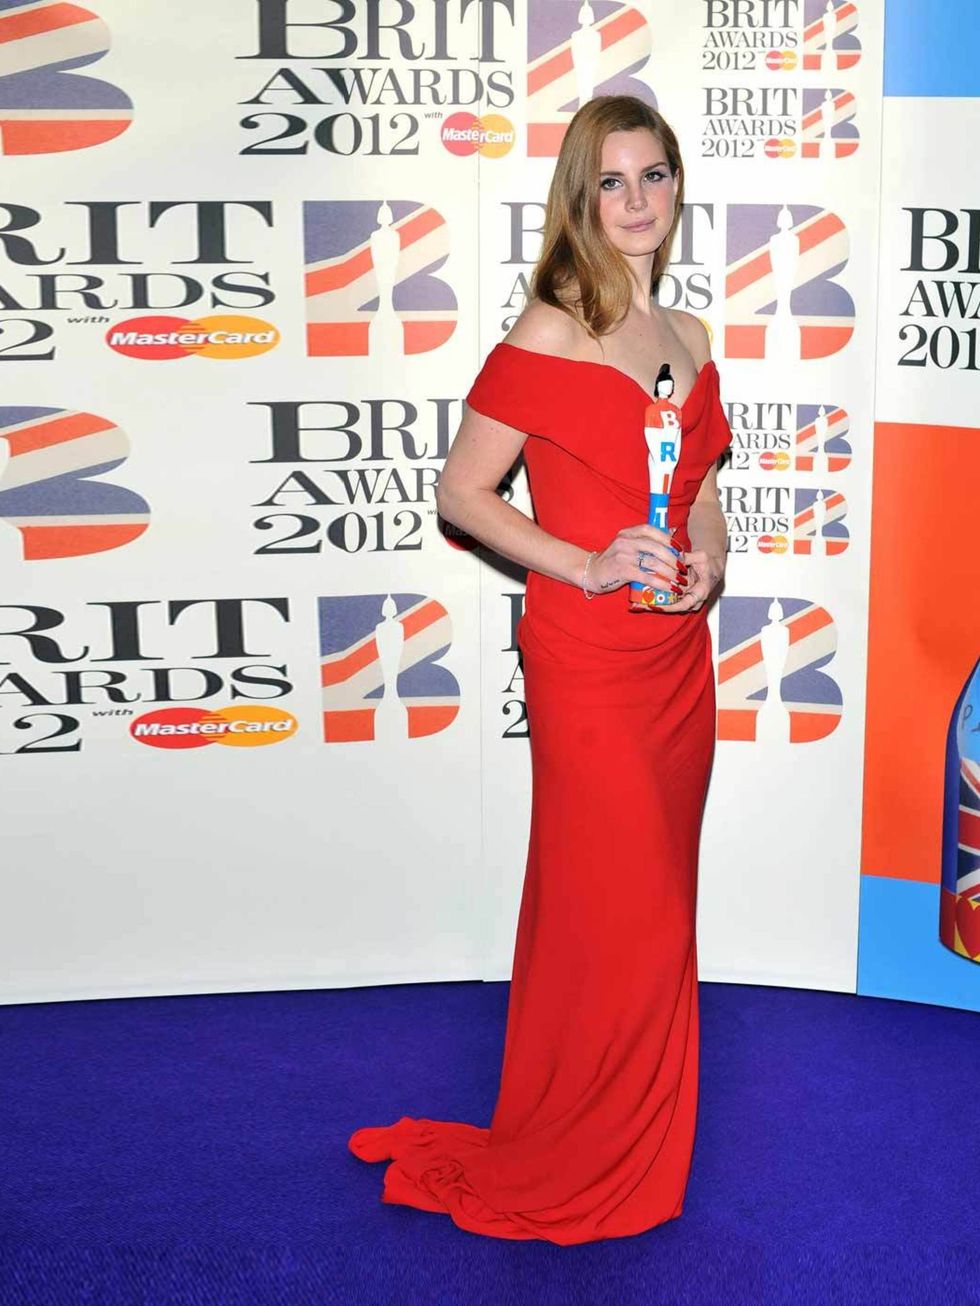 <p>International Breakthrough Act award winner <a href="http://www.elleuk.com/star-style/celebrity-style-files/lana-del-rey">Lana Del Rey</a> at the 2012 Brit Awards</p>